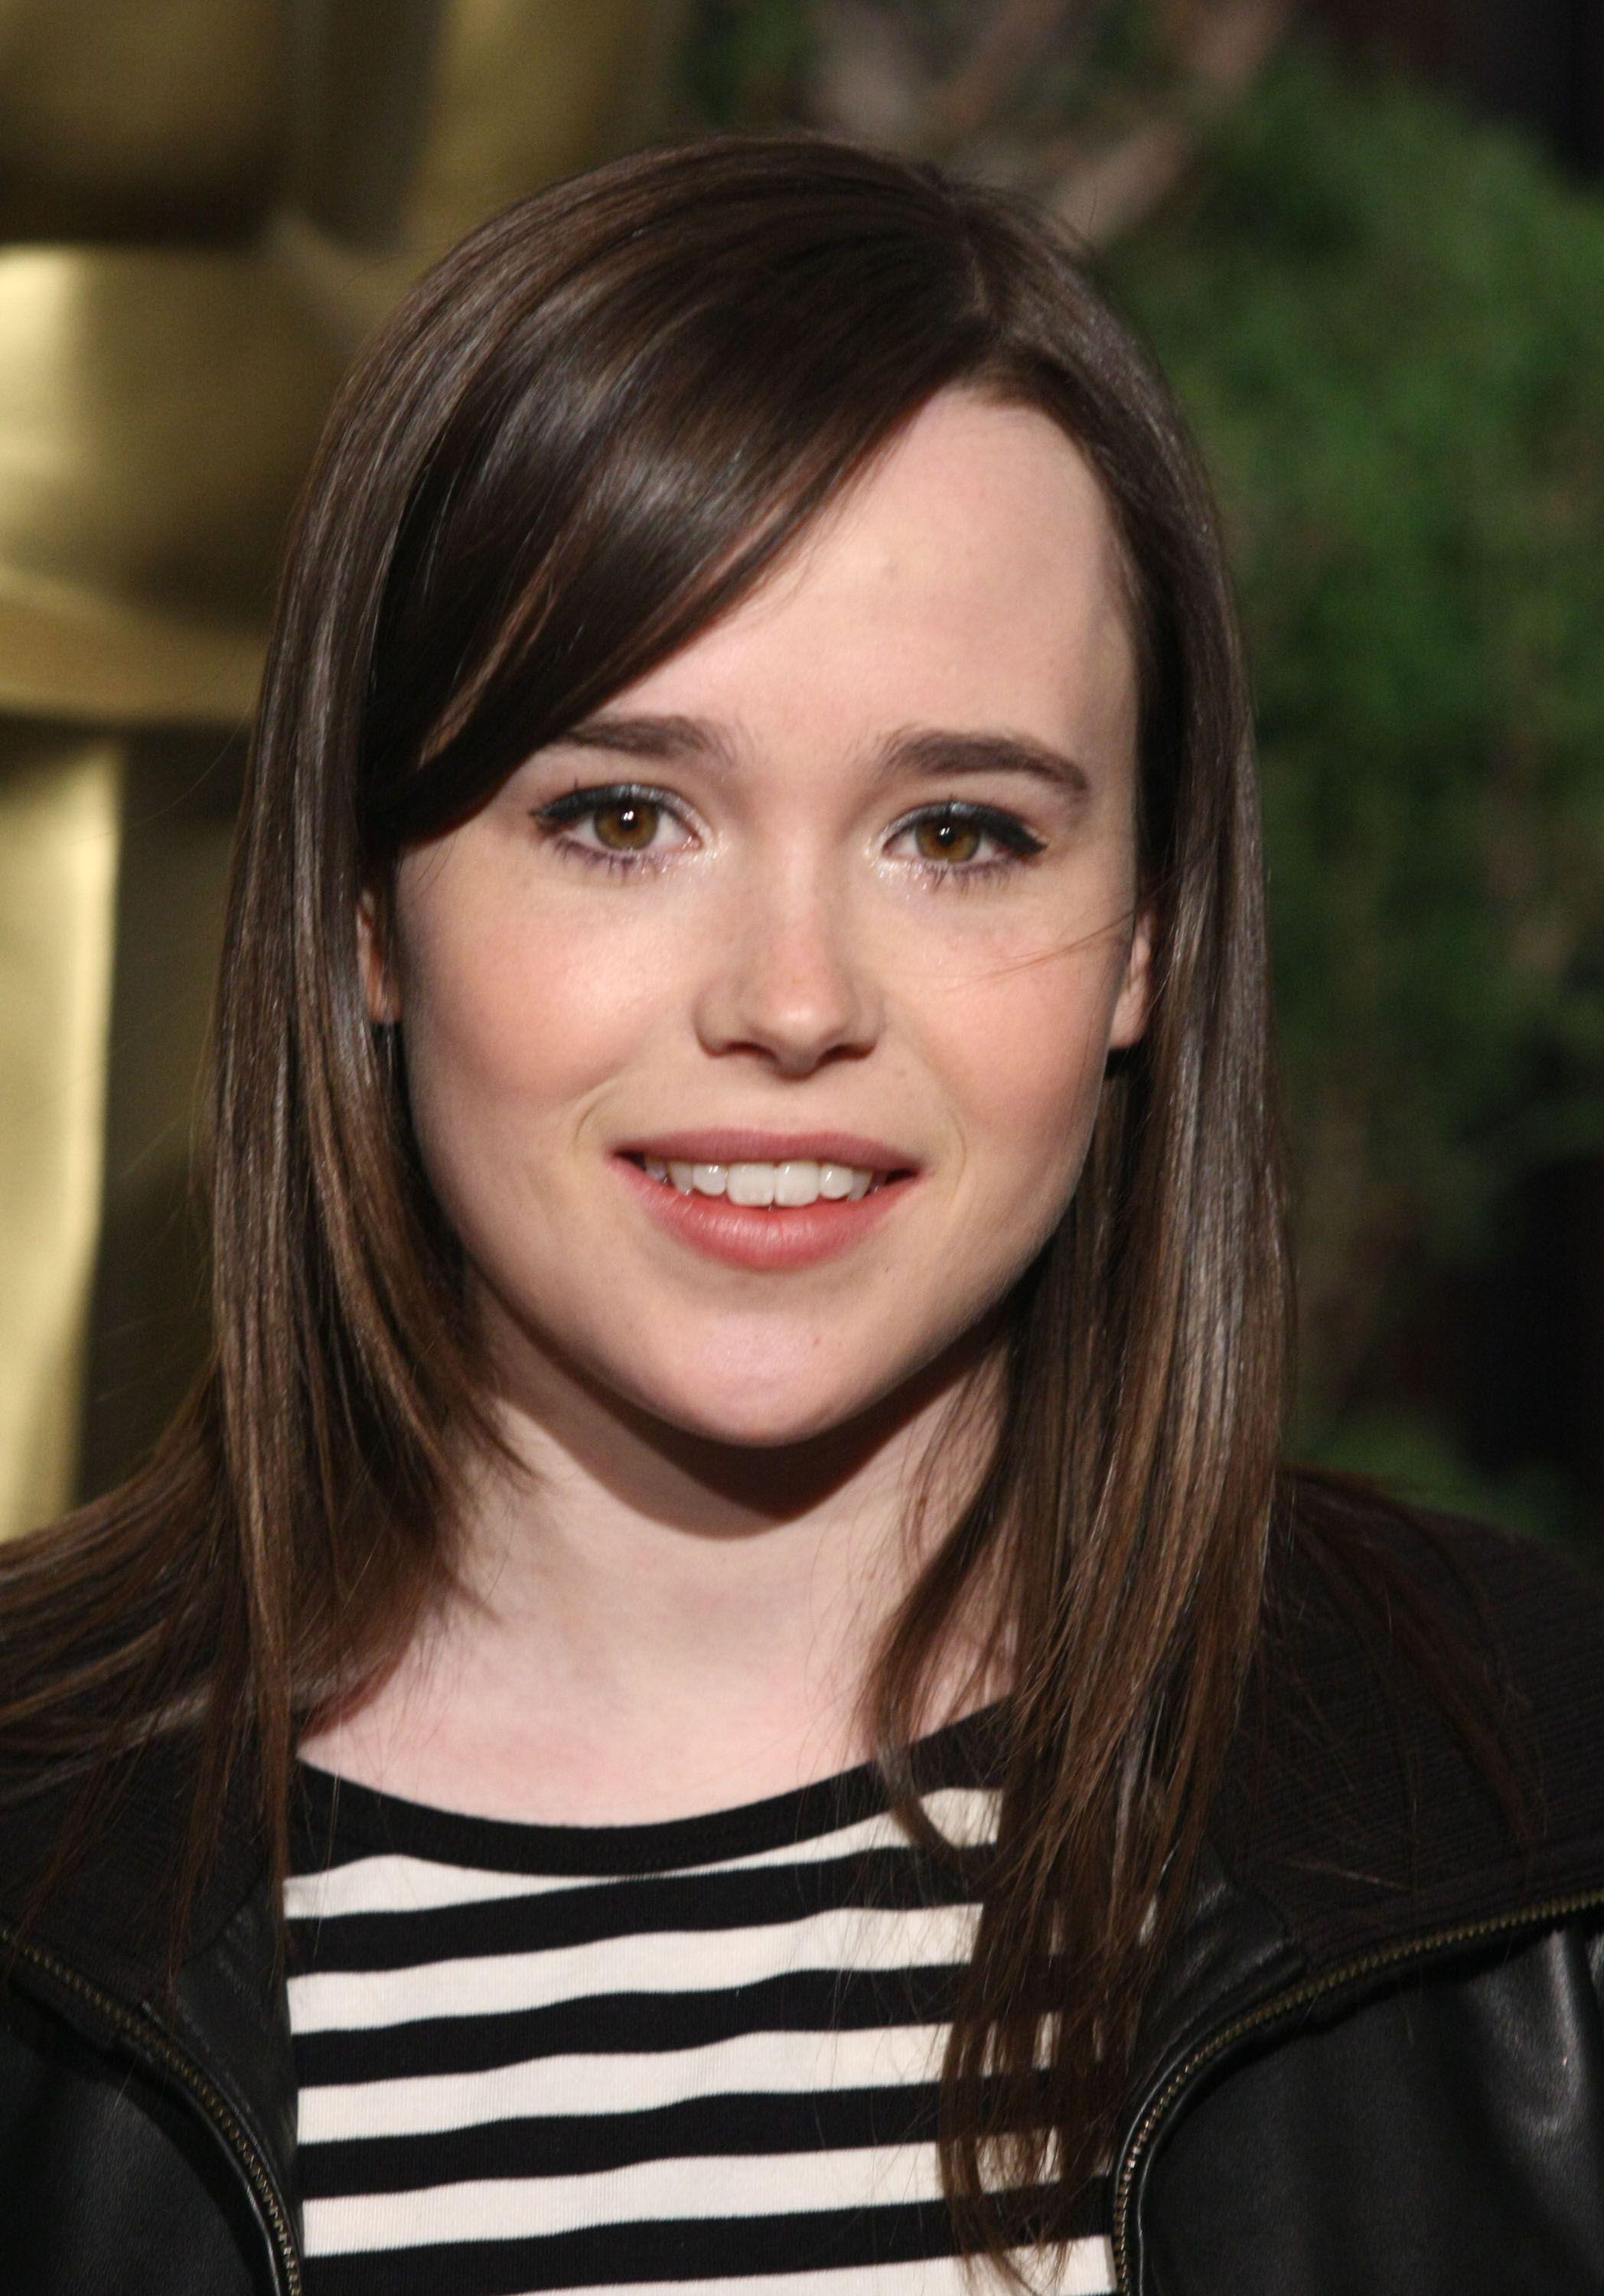 Ellen Page 2018 Wallpapers - Wallpaper Cave